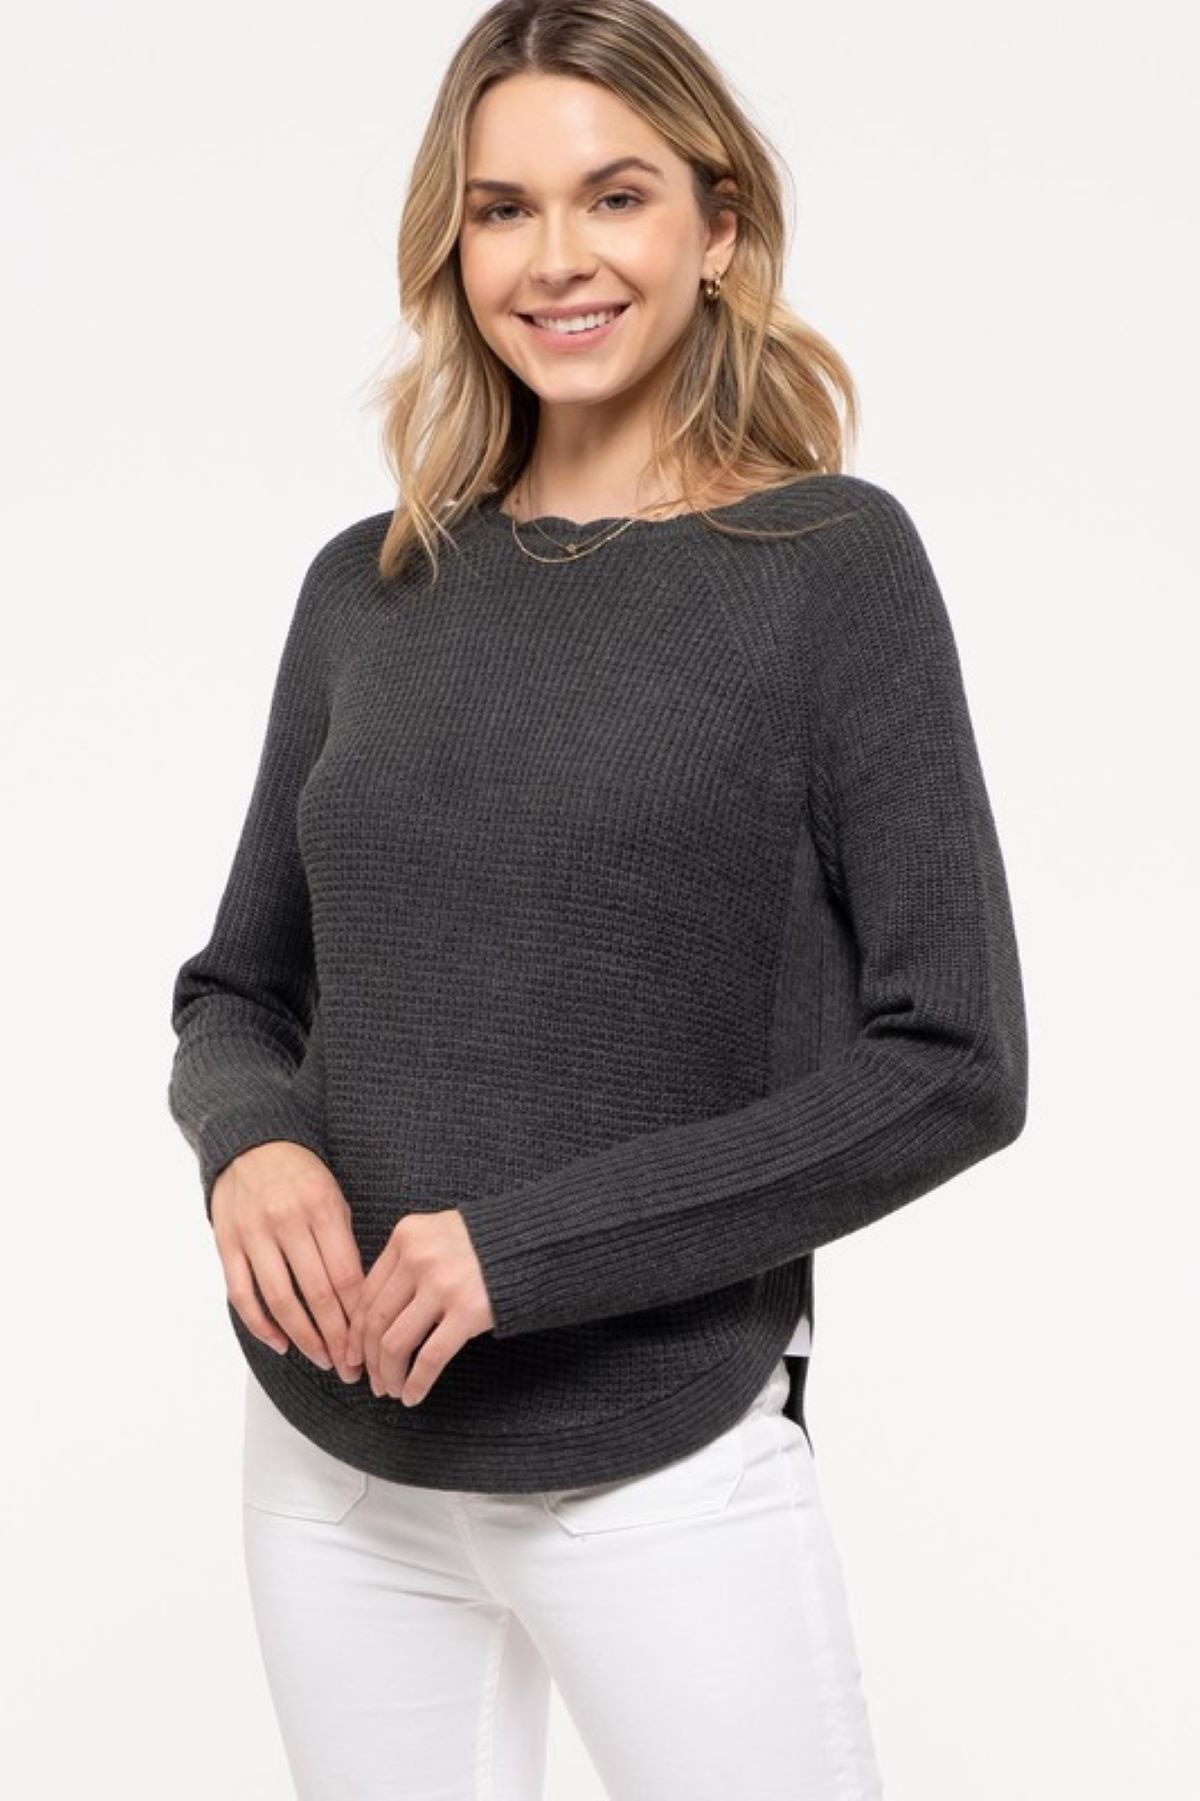 Paisley Scalloped Neckline Sweater